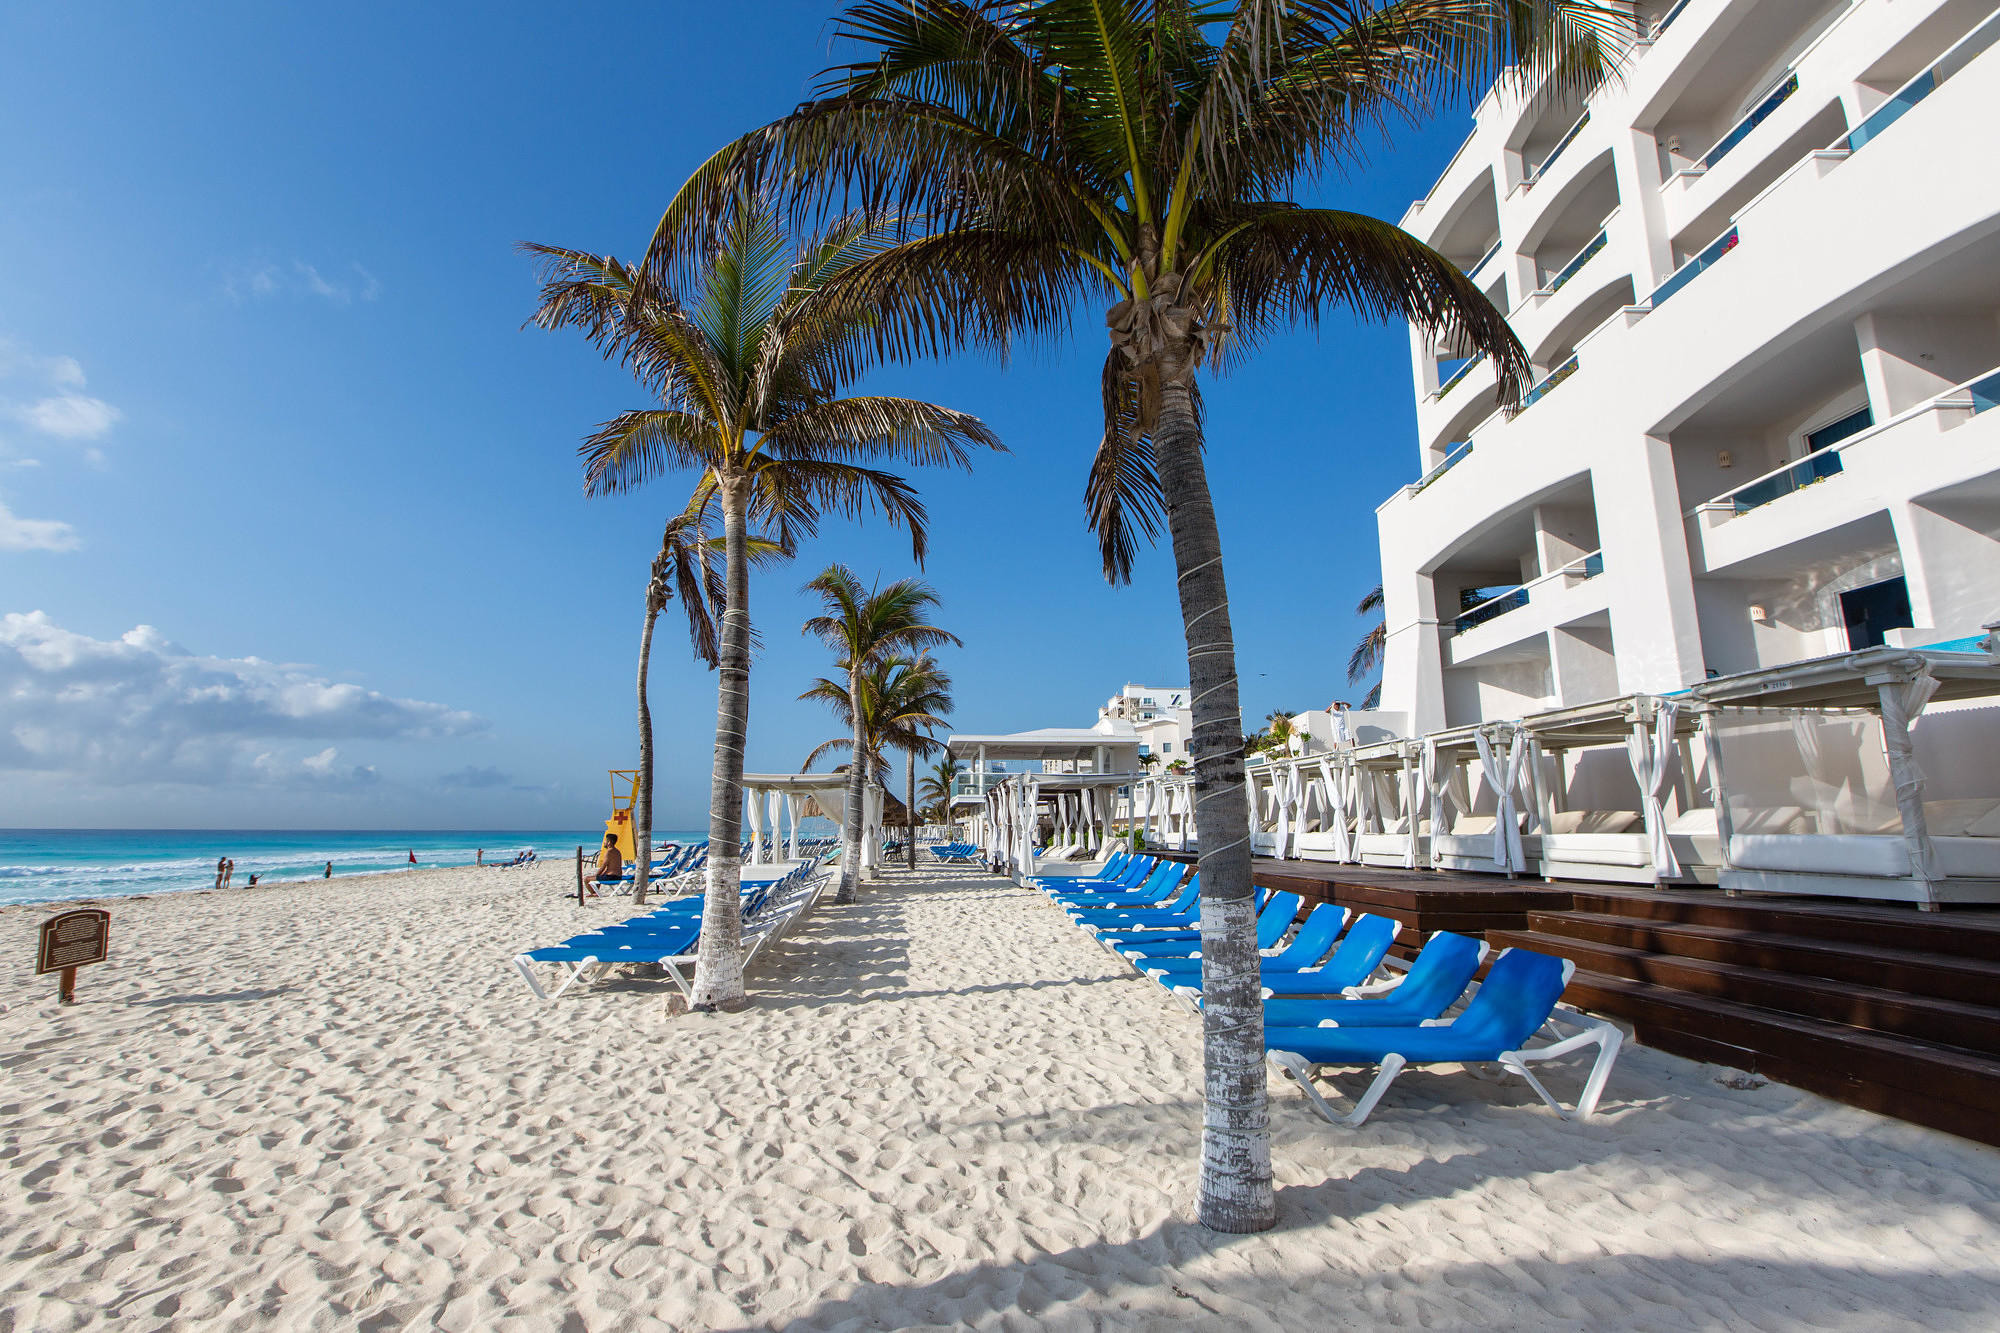 The beach at Panama Jack Resorts Cancun